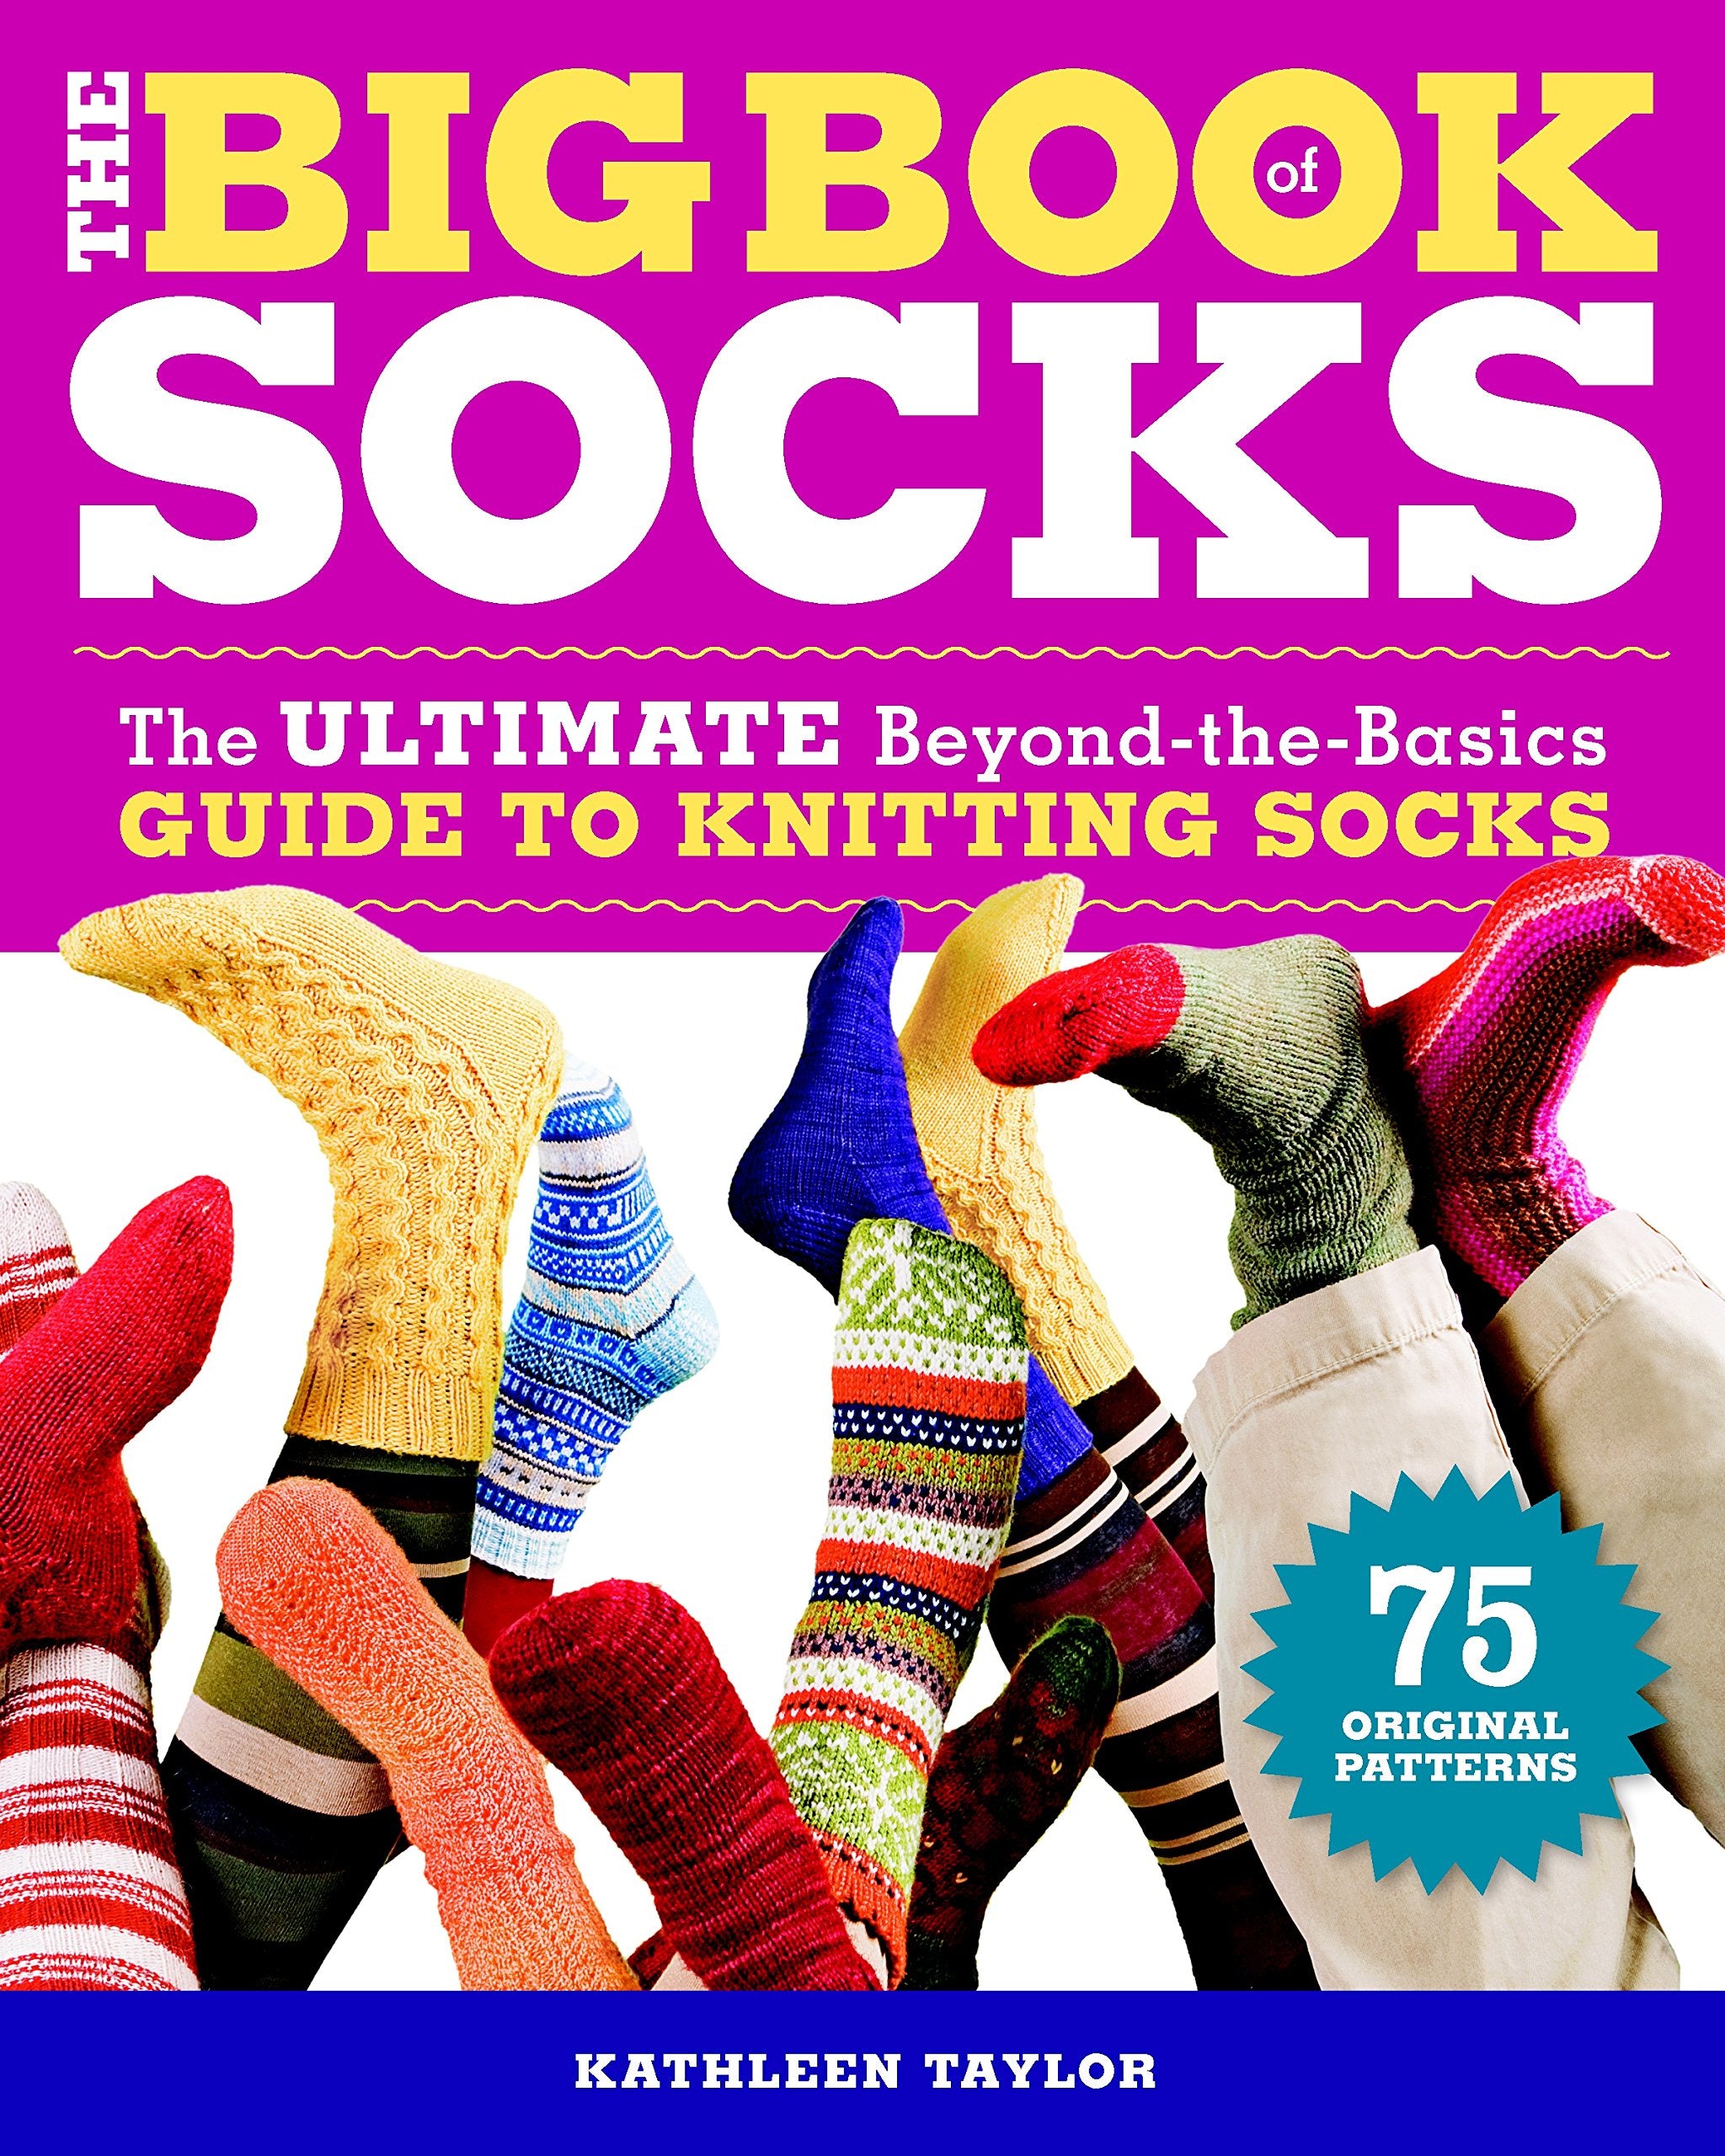 The Big Book of Socks